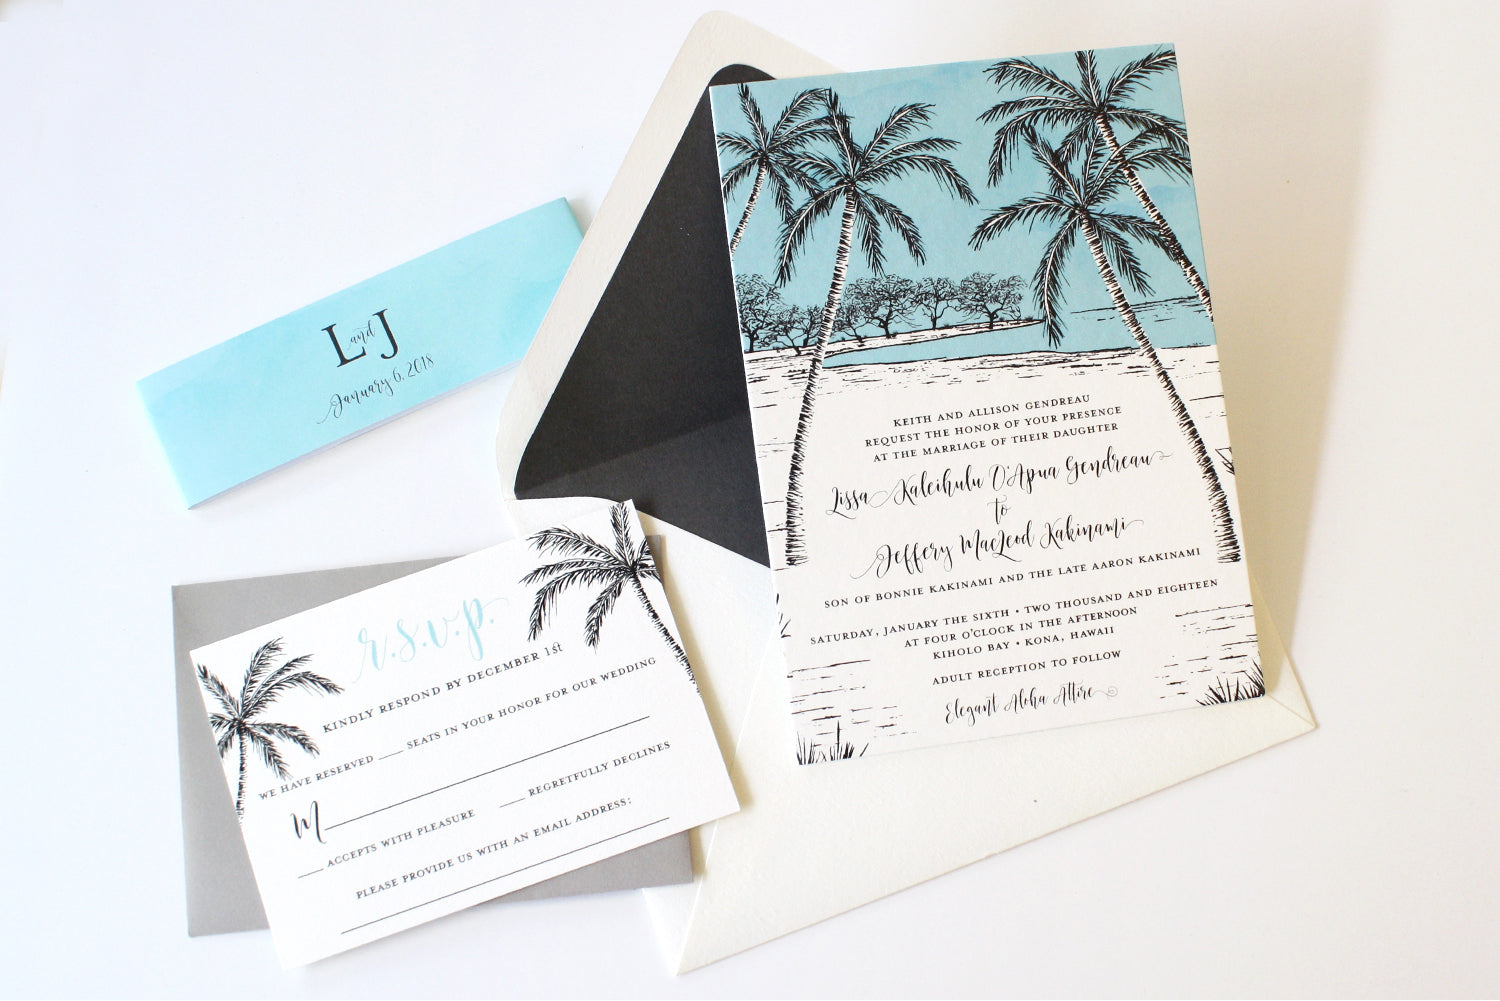 Lissa and Jeff wedding invite suite: Old Hawaiiana meets Modern Luxe